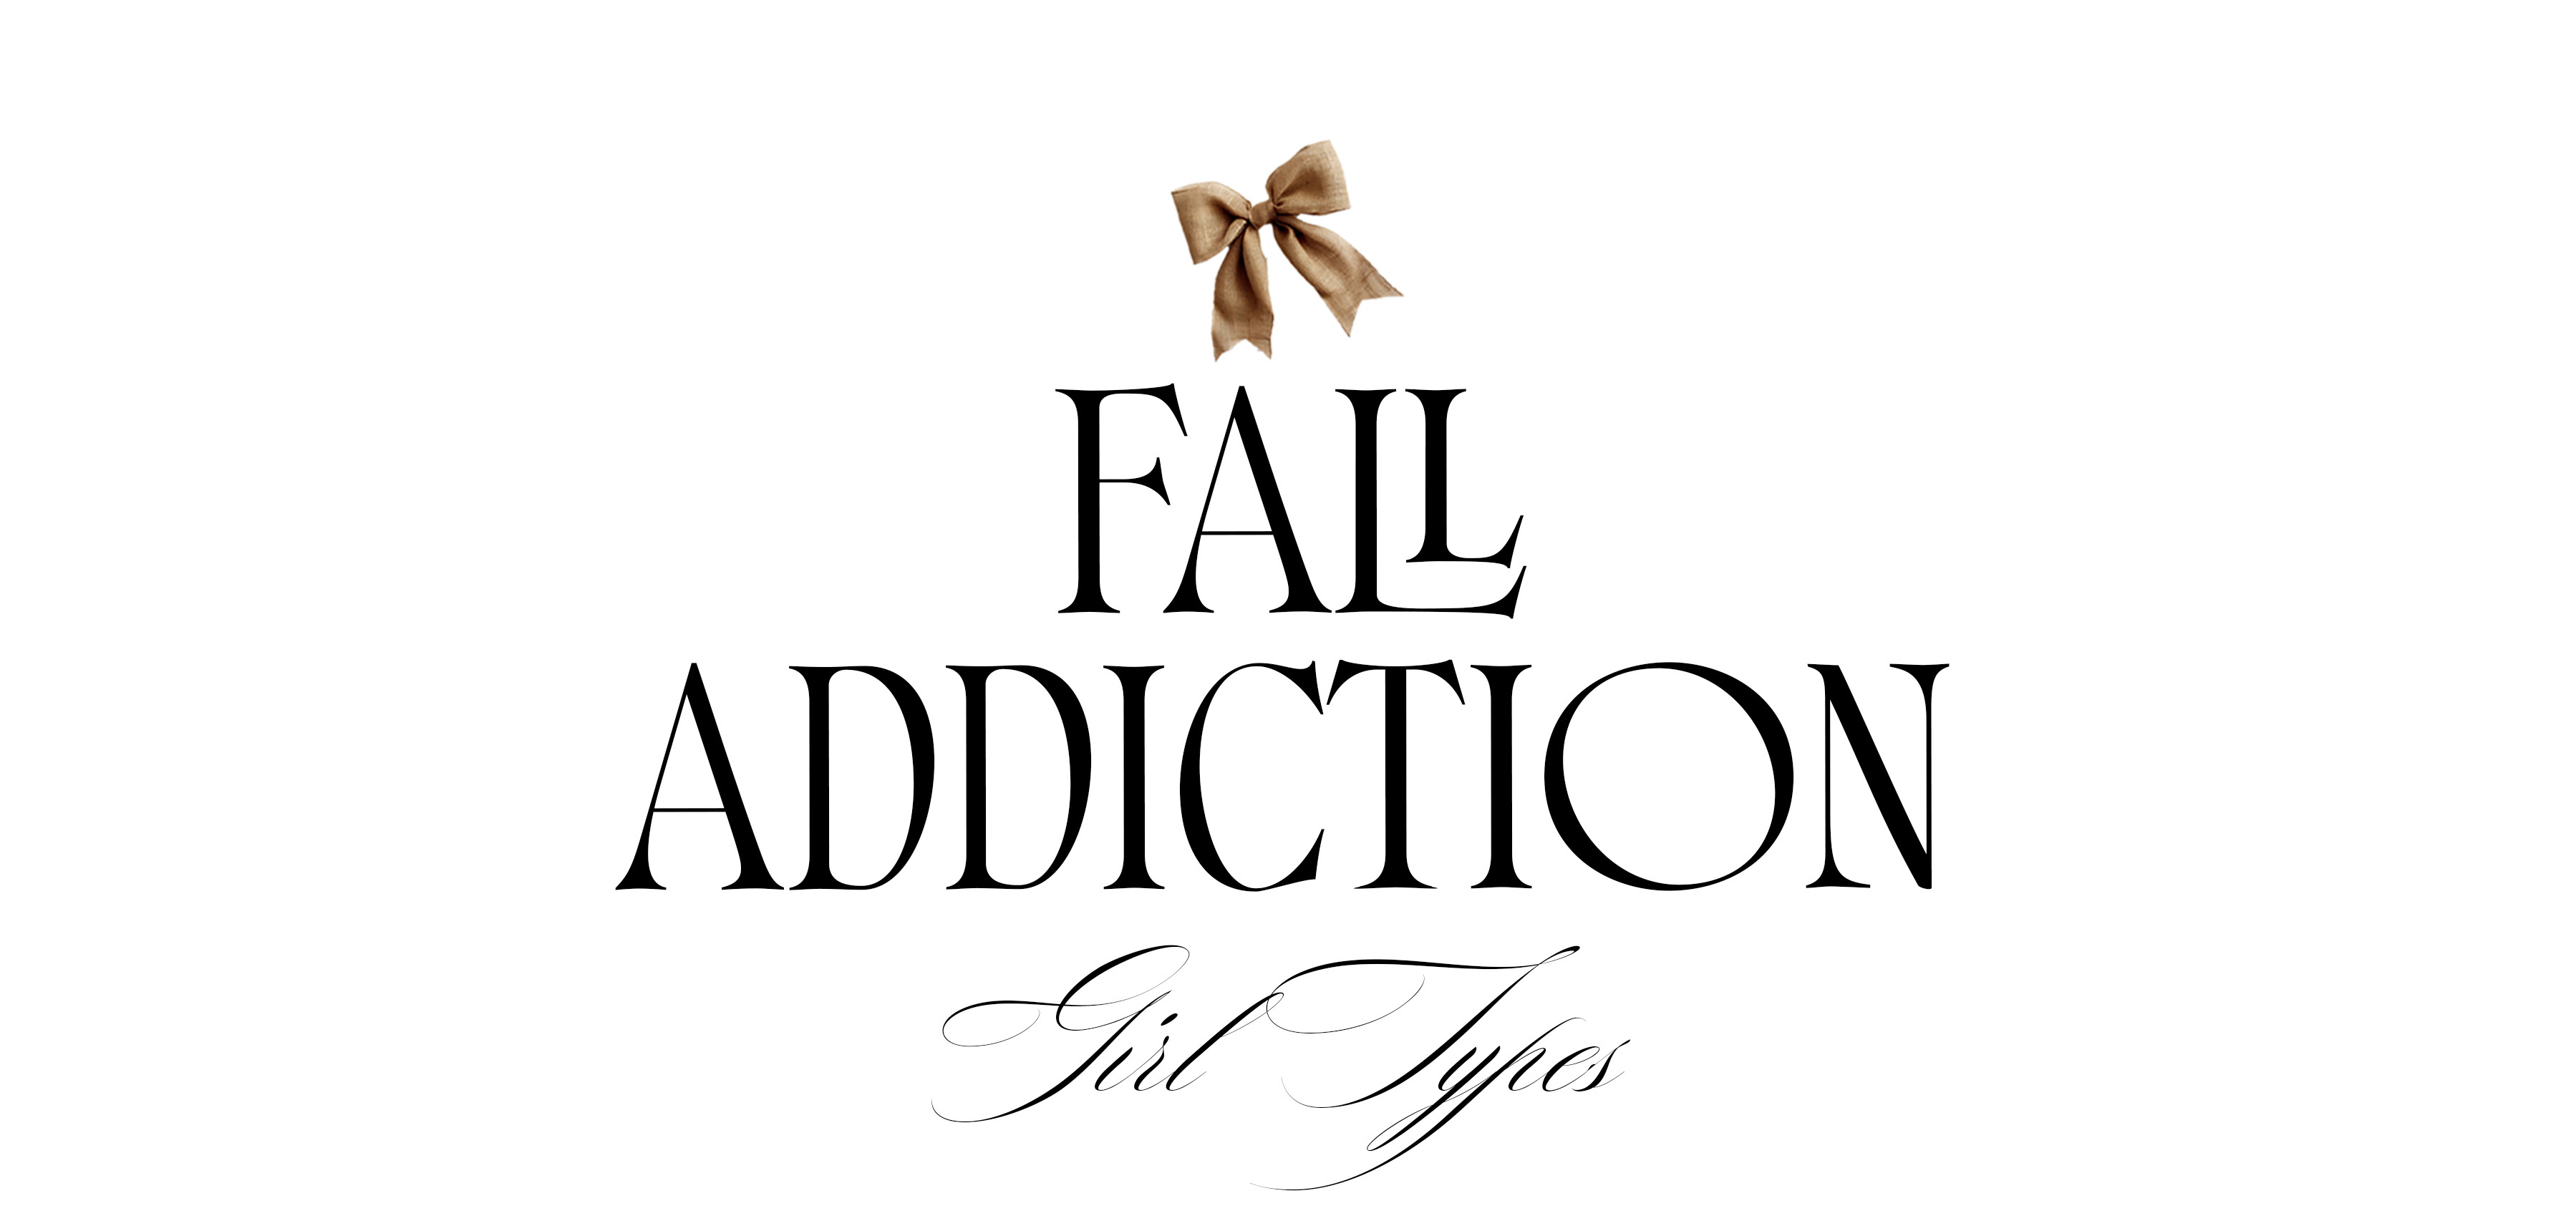 Fall Addiction Girl Types